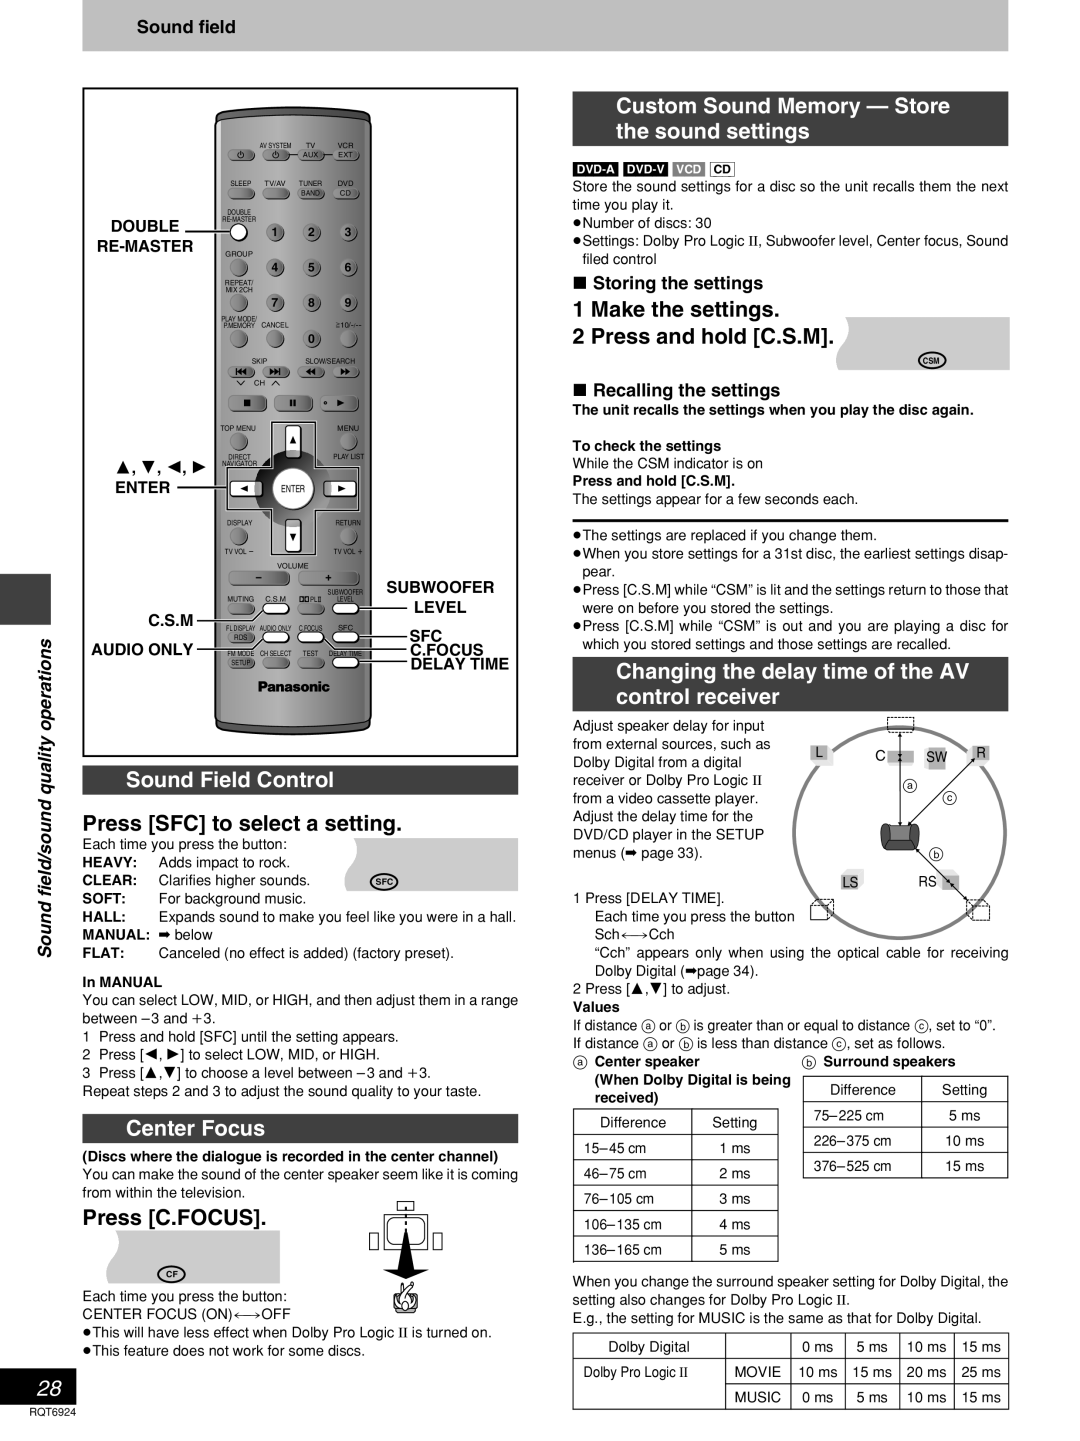 Panasonic SC-DT310 manual Sound Field Control, Press SFC to select a setting, Center Focus, Press C.FOCUS, control receiver 